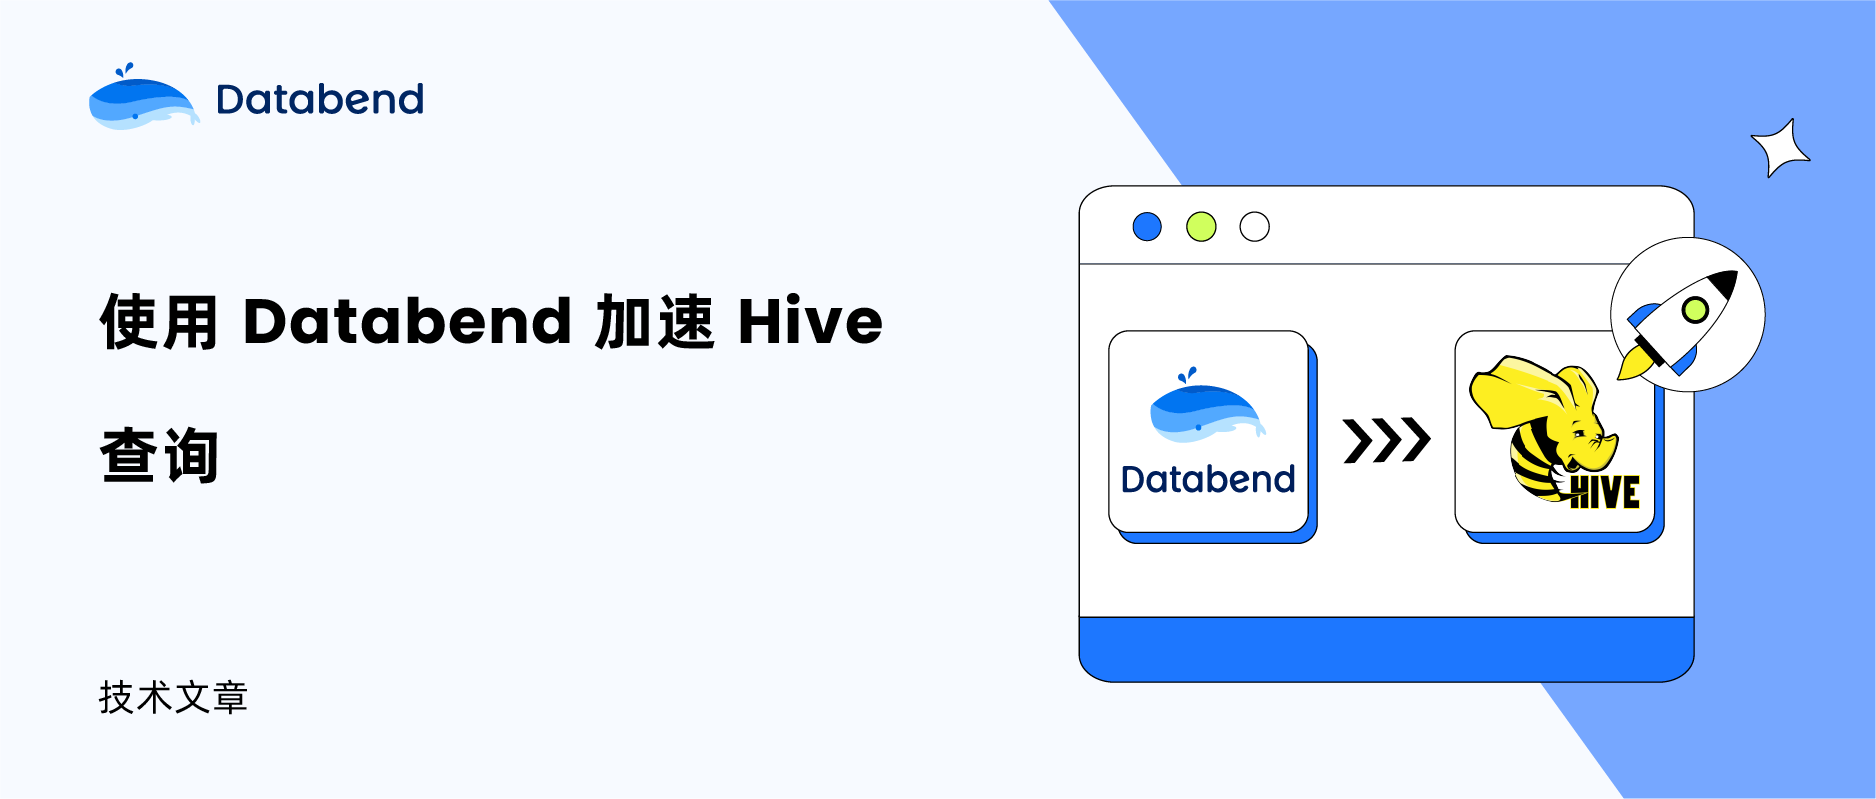 使用 Databend 加速 Hive 查询